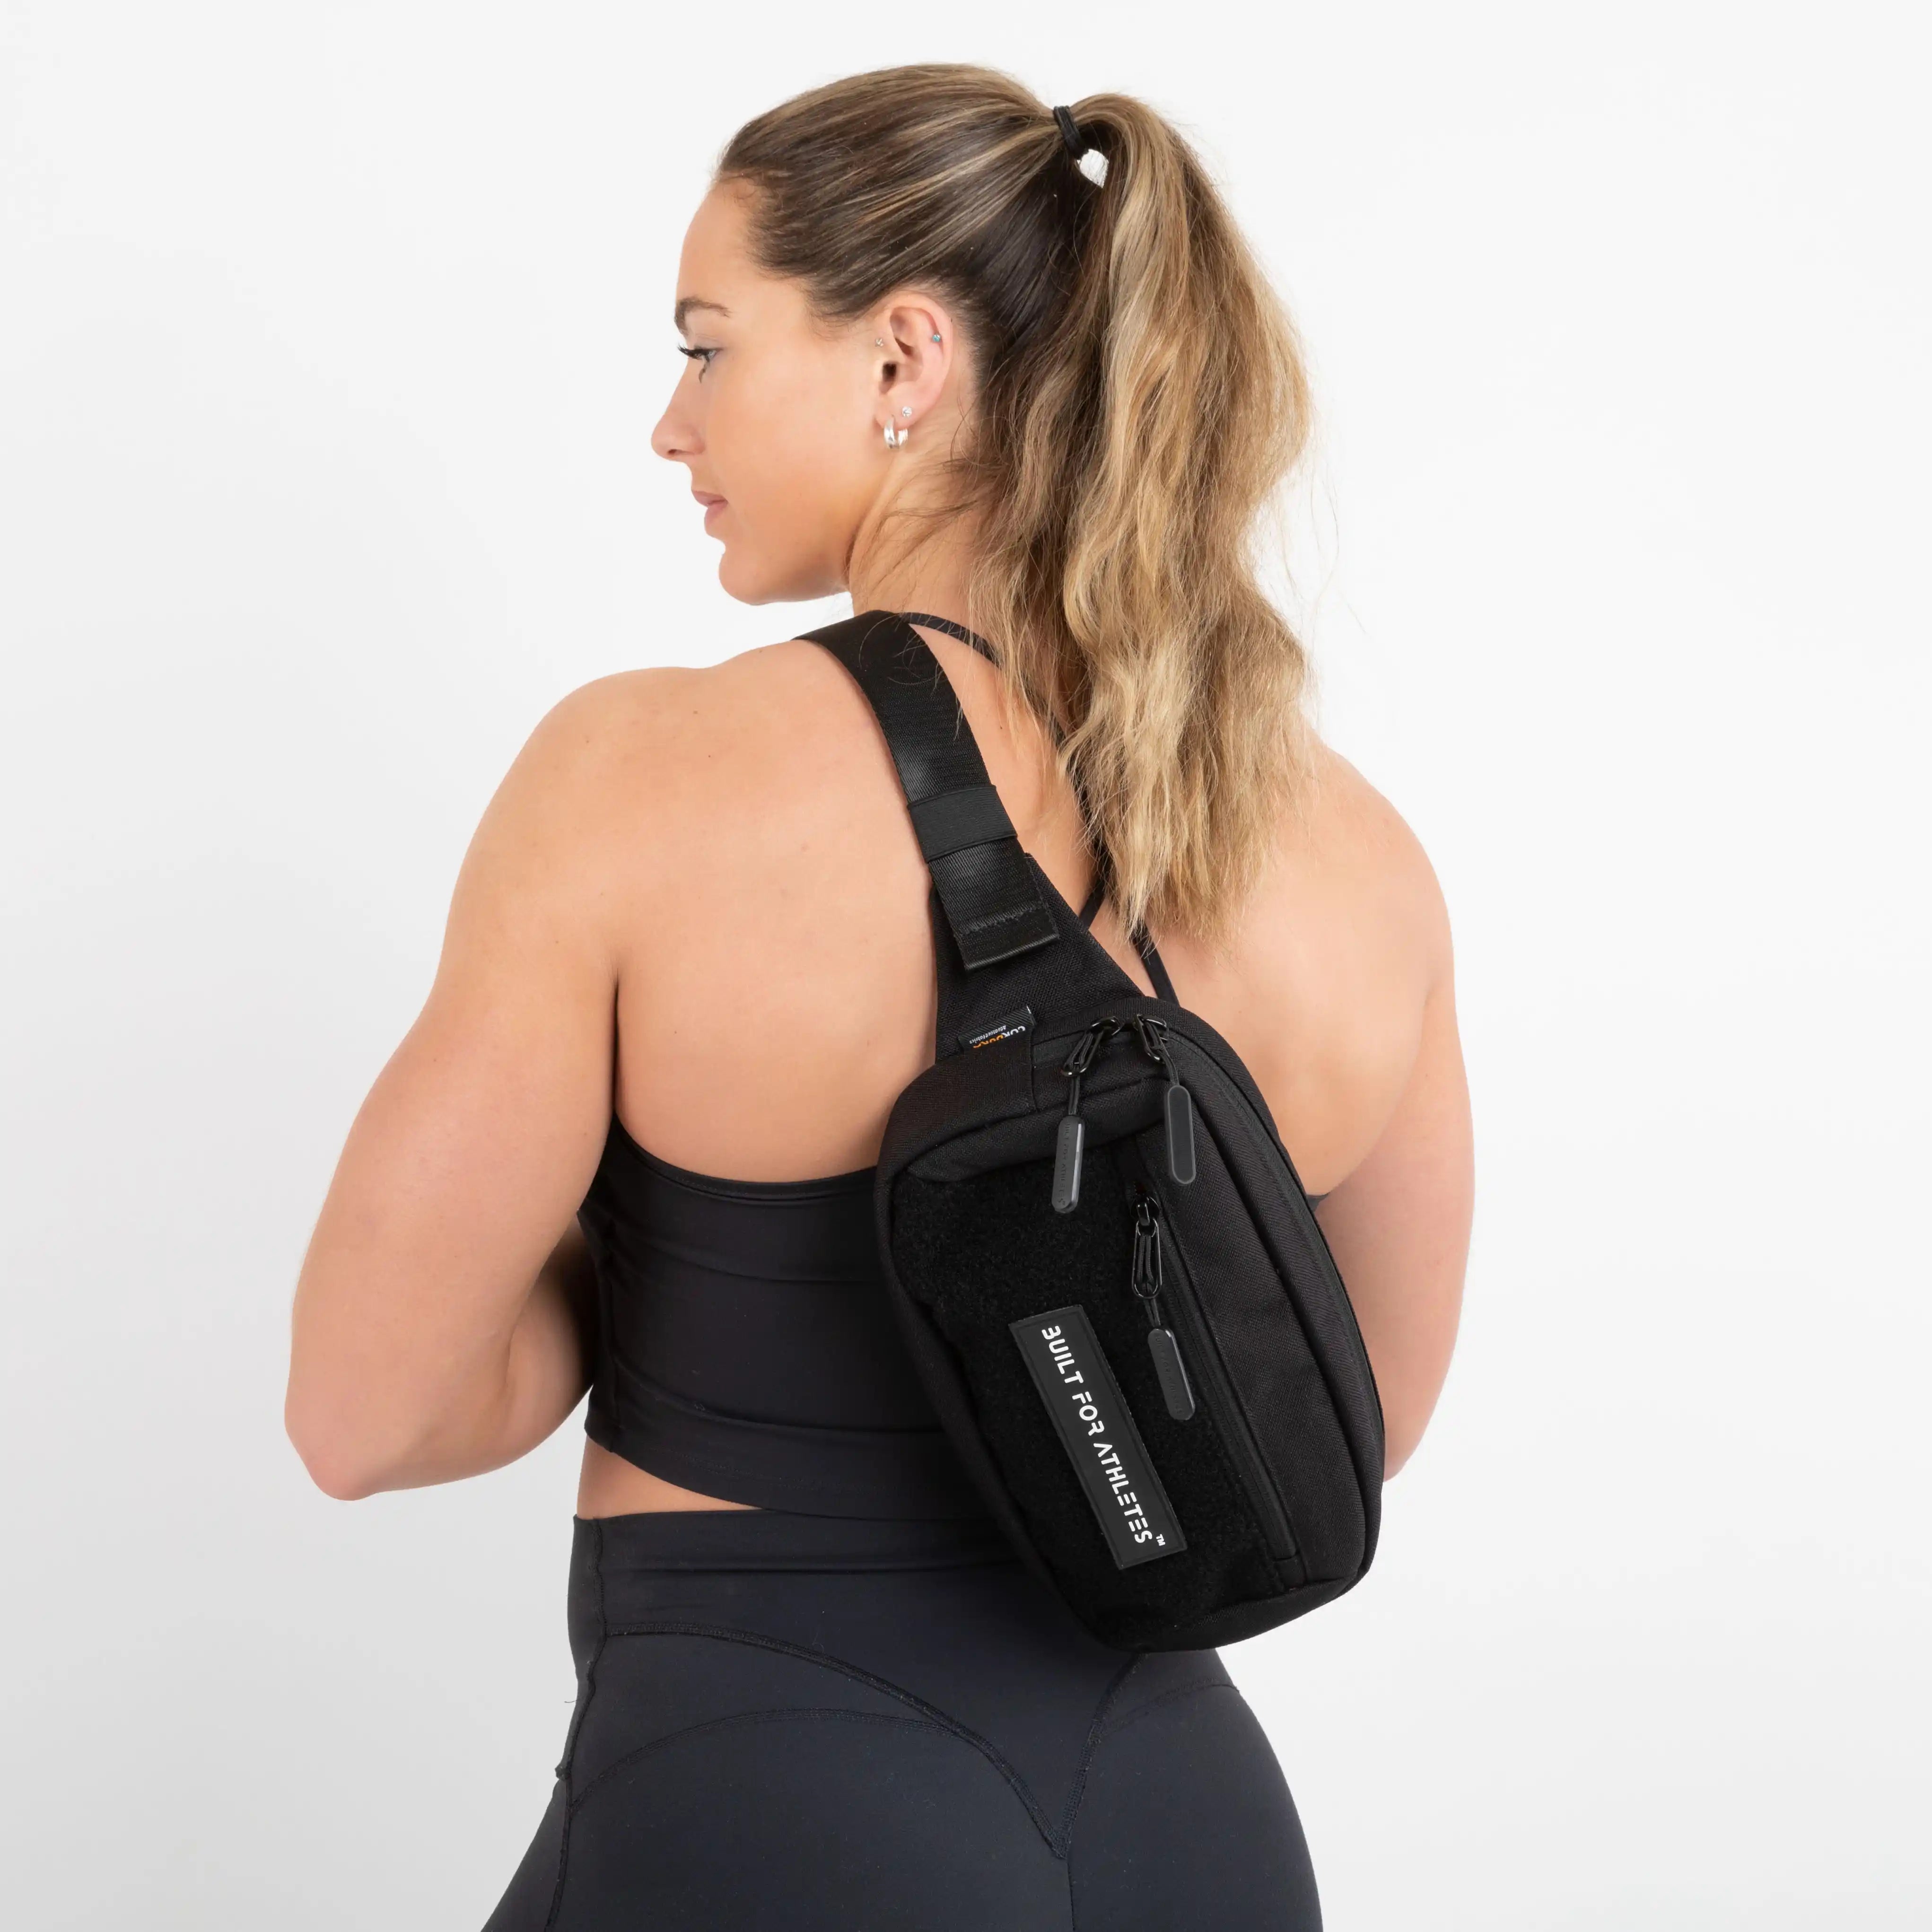 Built For Athletes Backpacks Pro Series Crossbody Bag